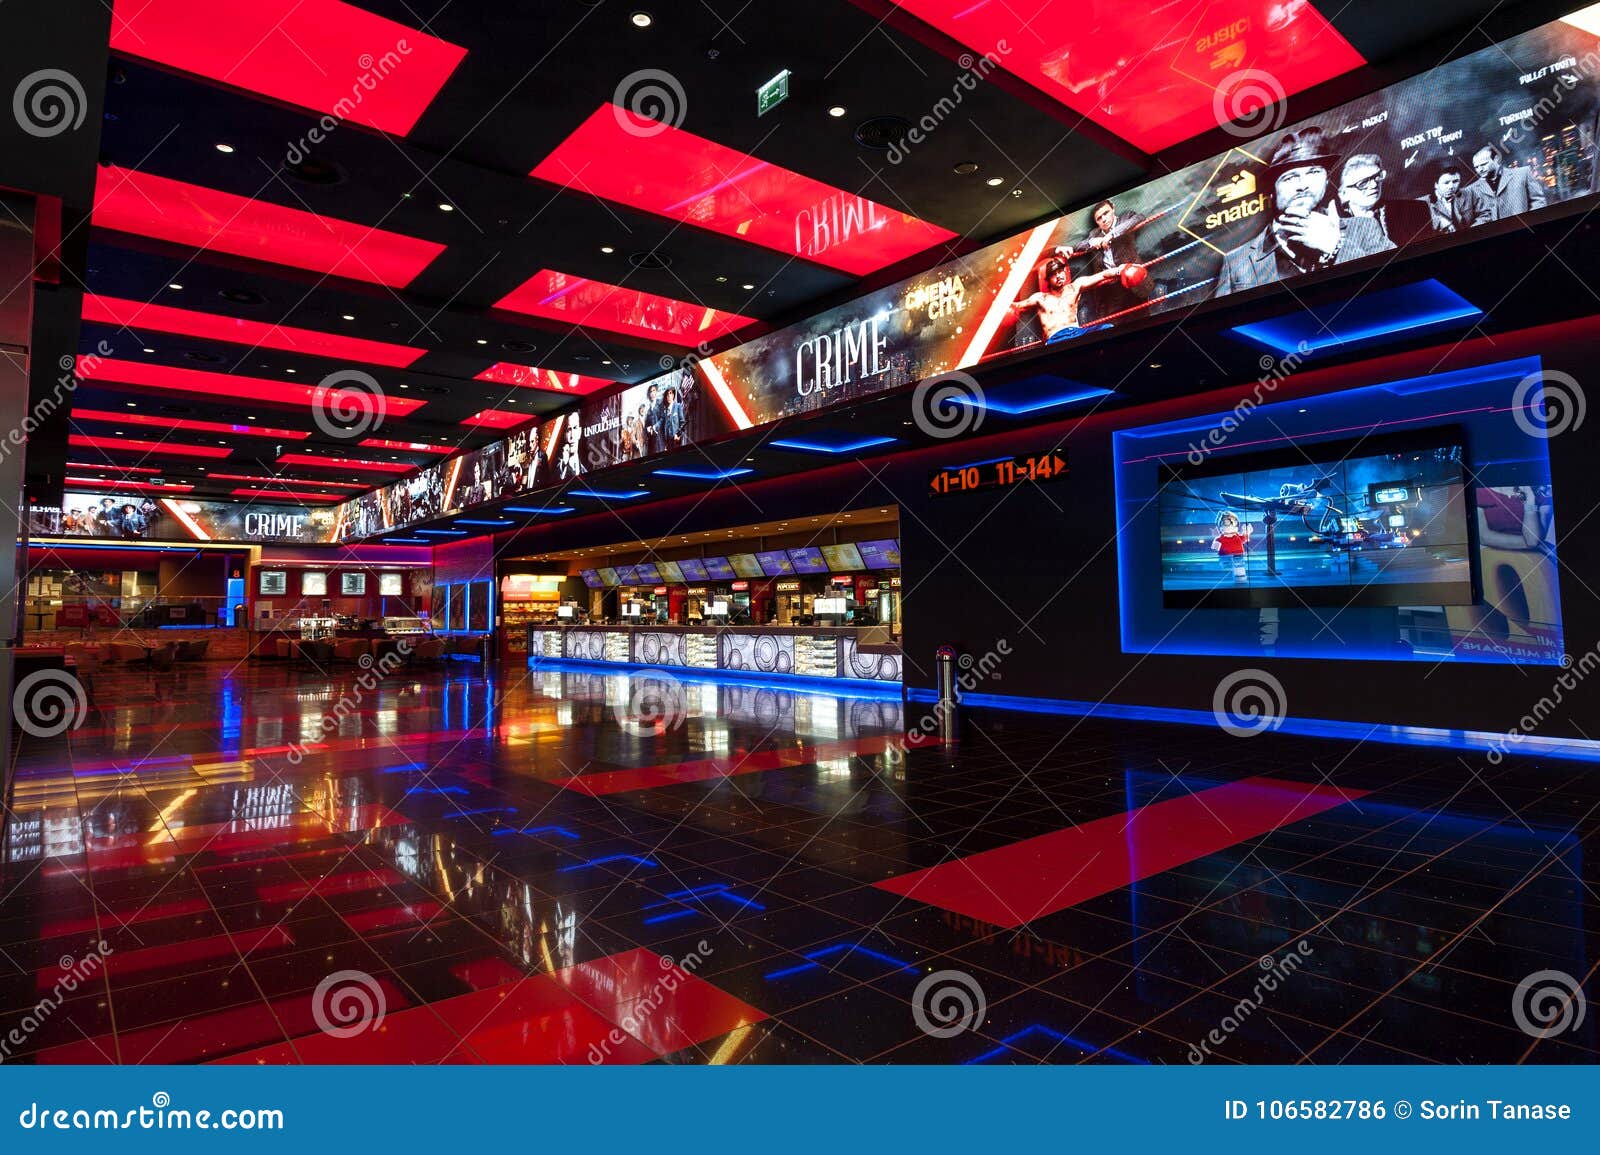 Cinema Lounge at the Mega Mall Editorial Photo of mall: 106582786